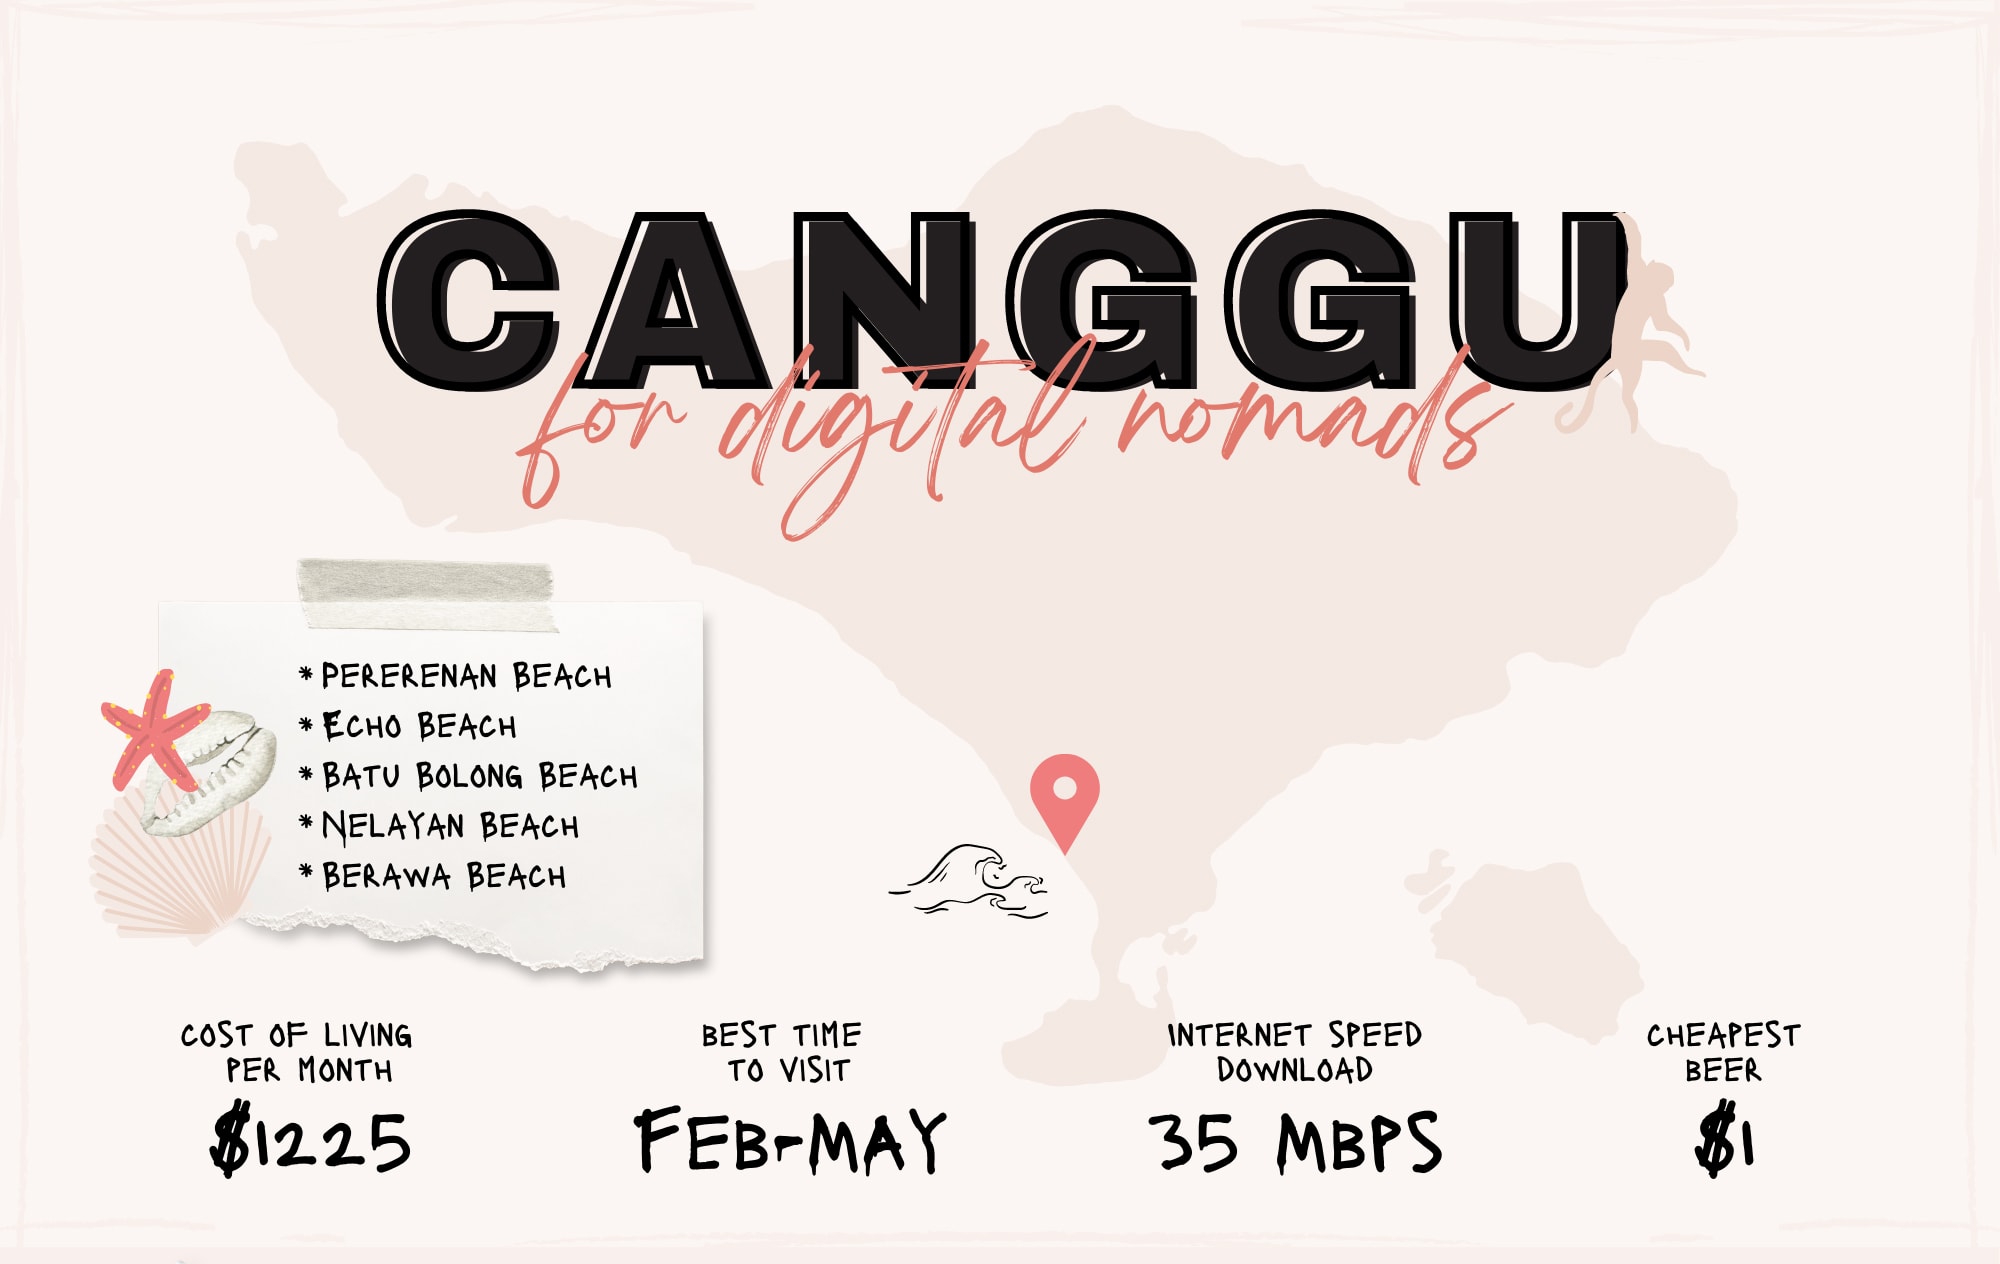 Canggu Bali for digital nomads infographic